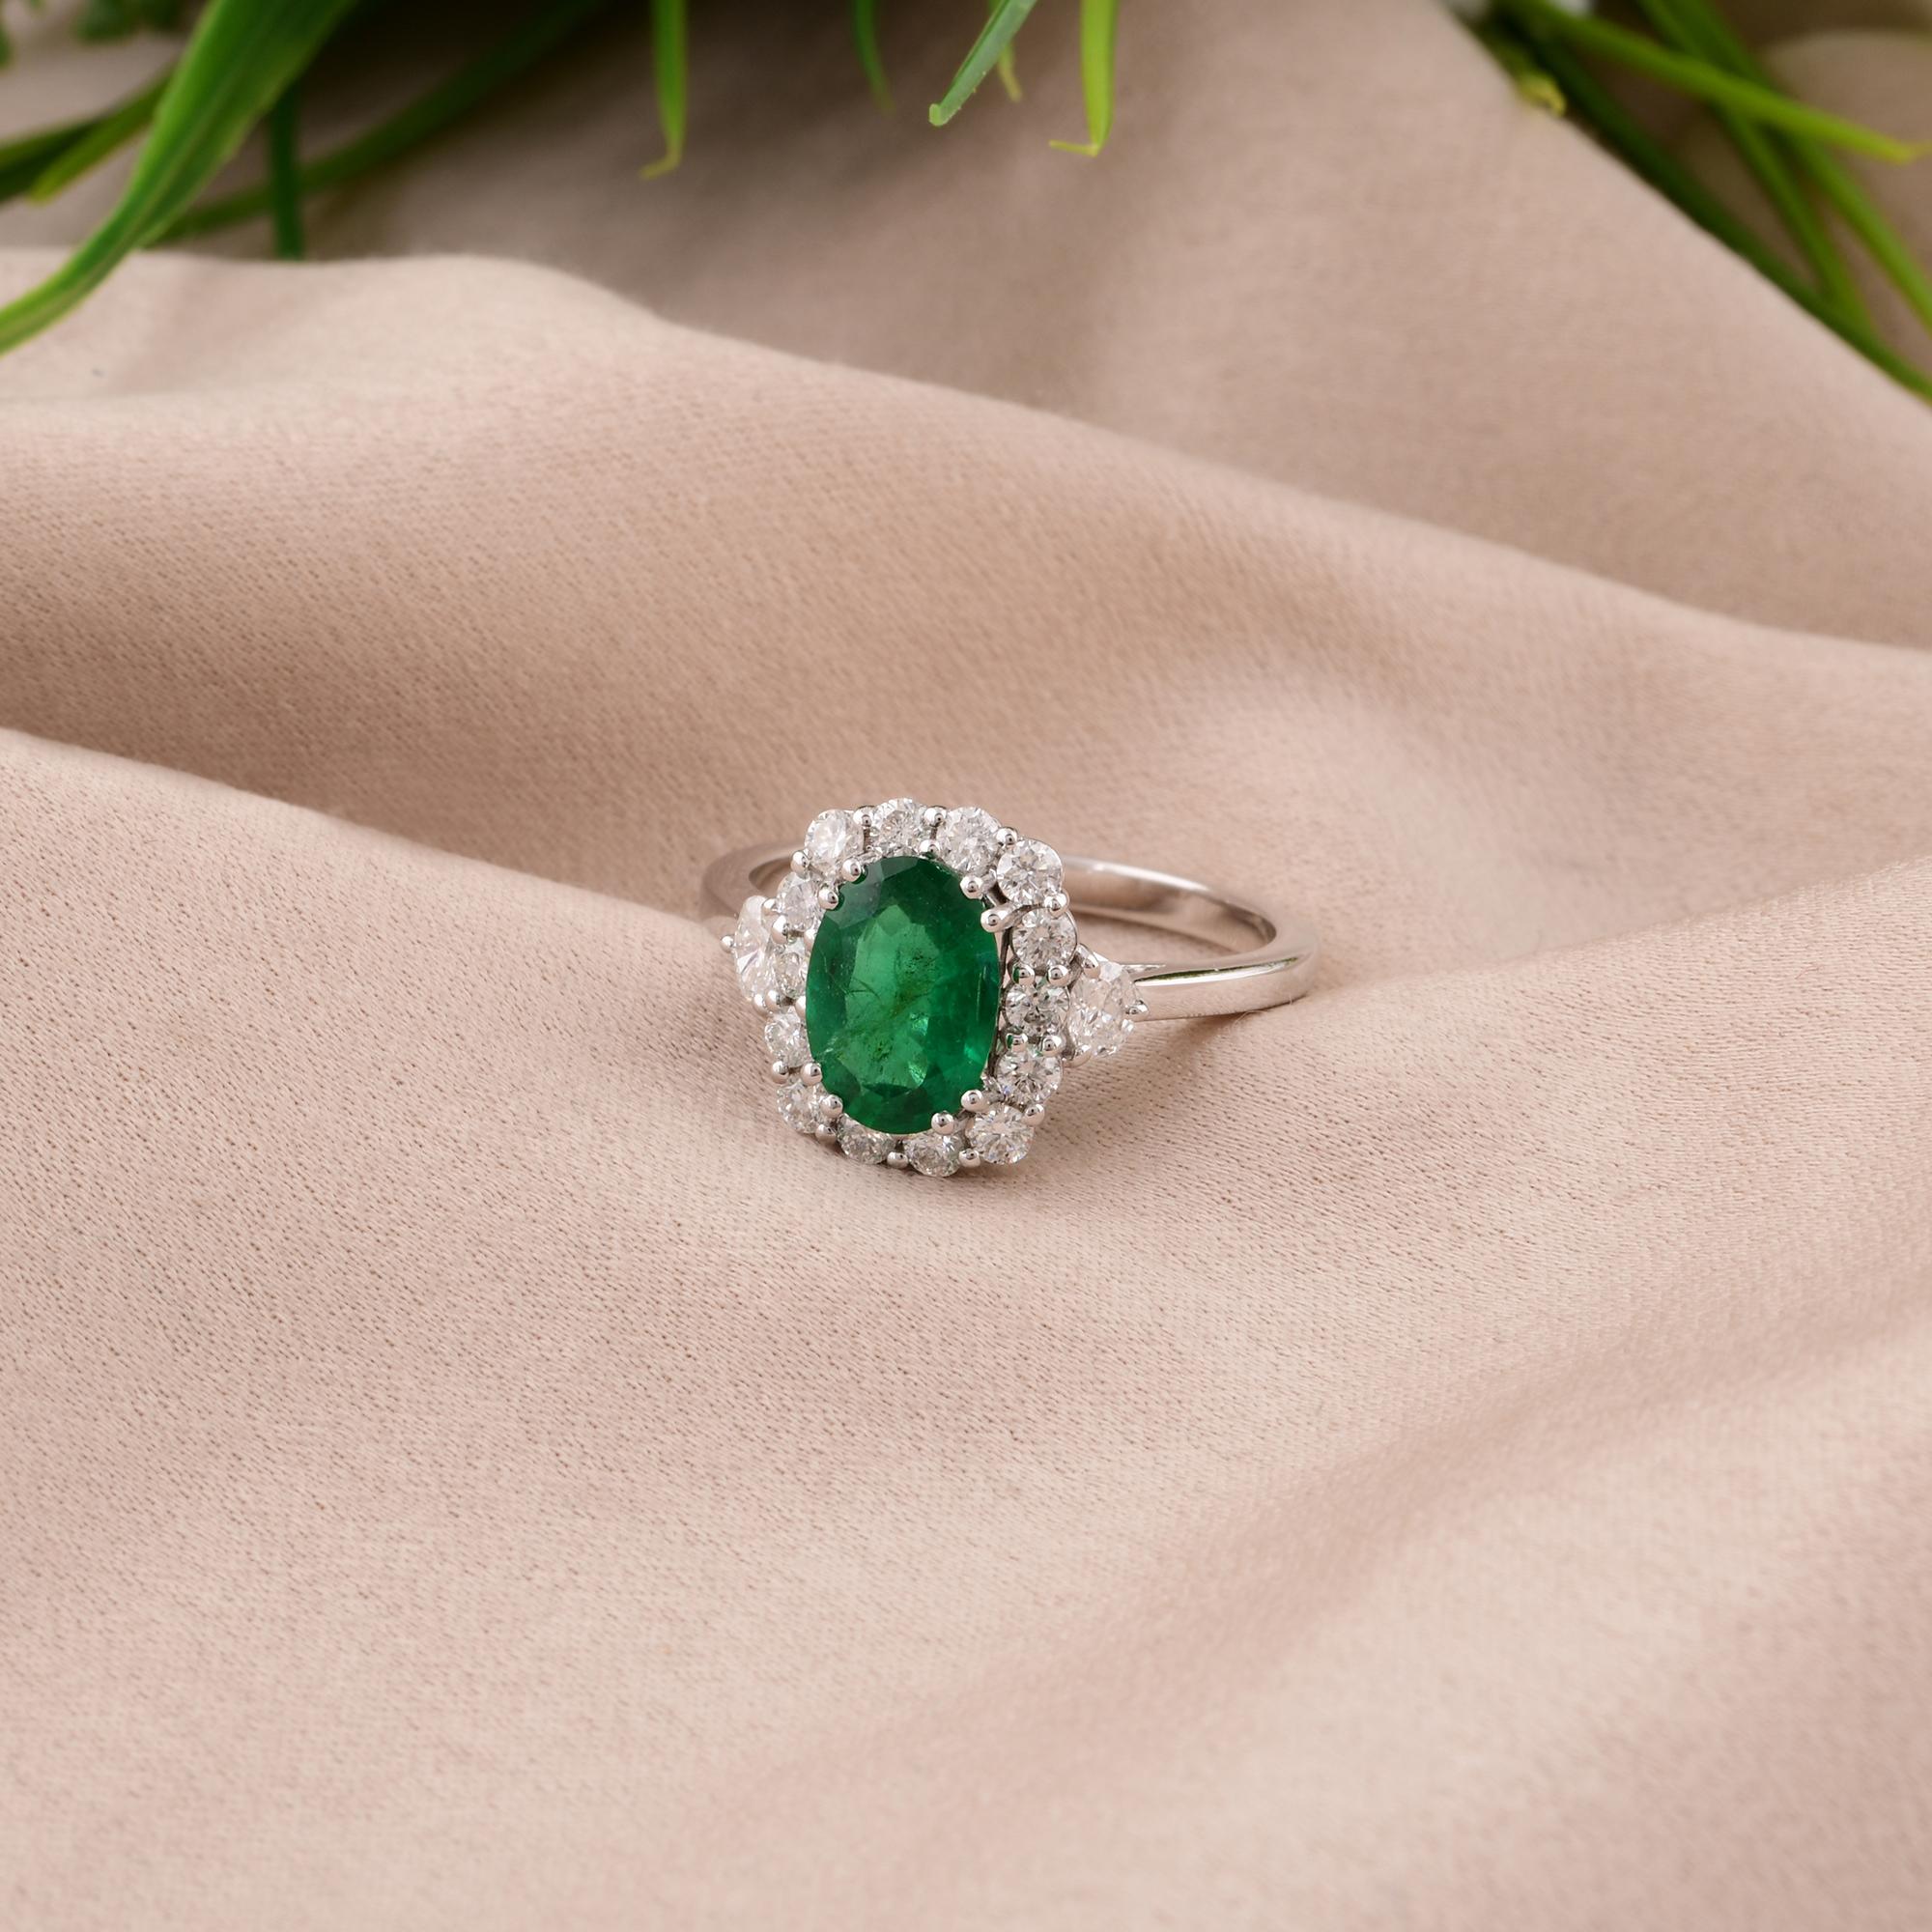 Oval Cut Oval Zambian Emerald Cocktail Ring Diamond 18 Karat White Gold Handmade Jewelry For Sale